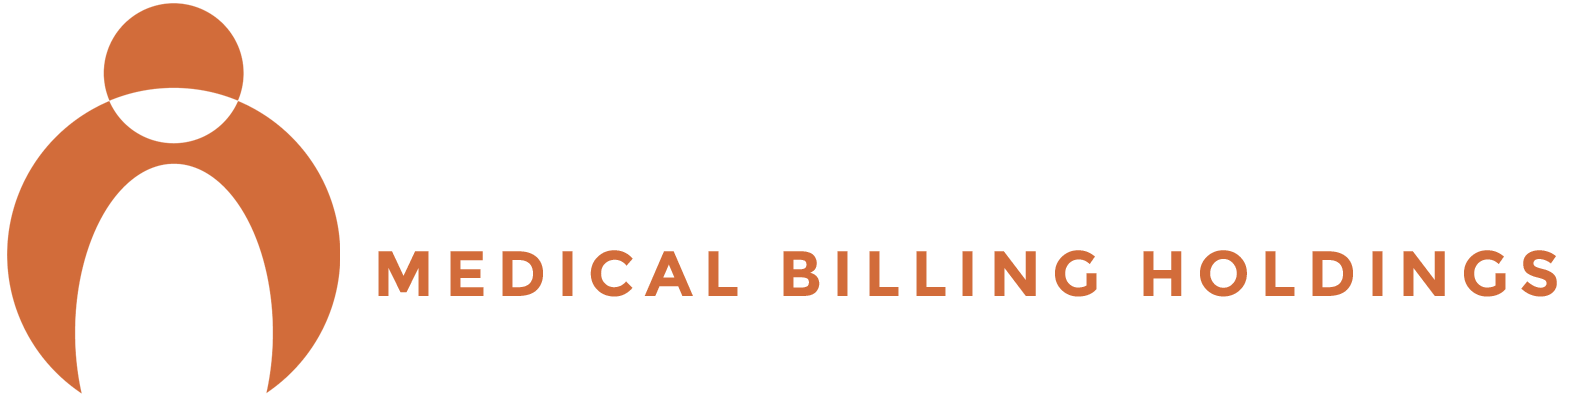 Capstone Medical Billing